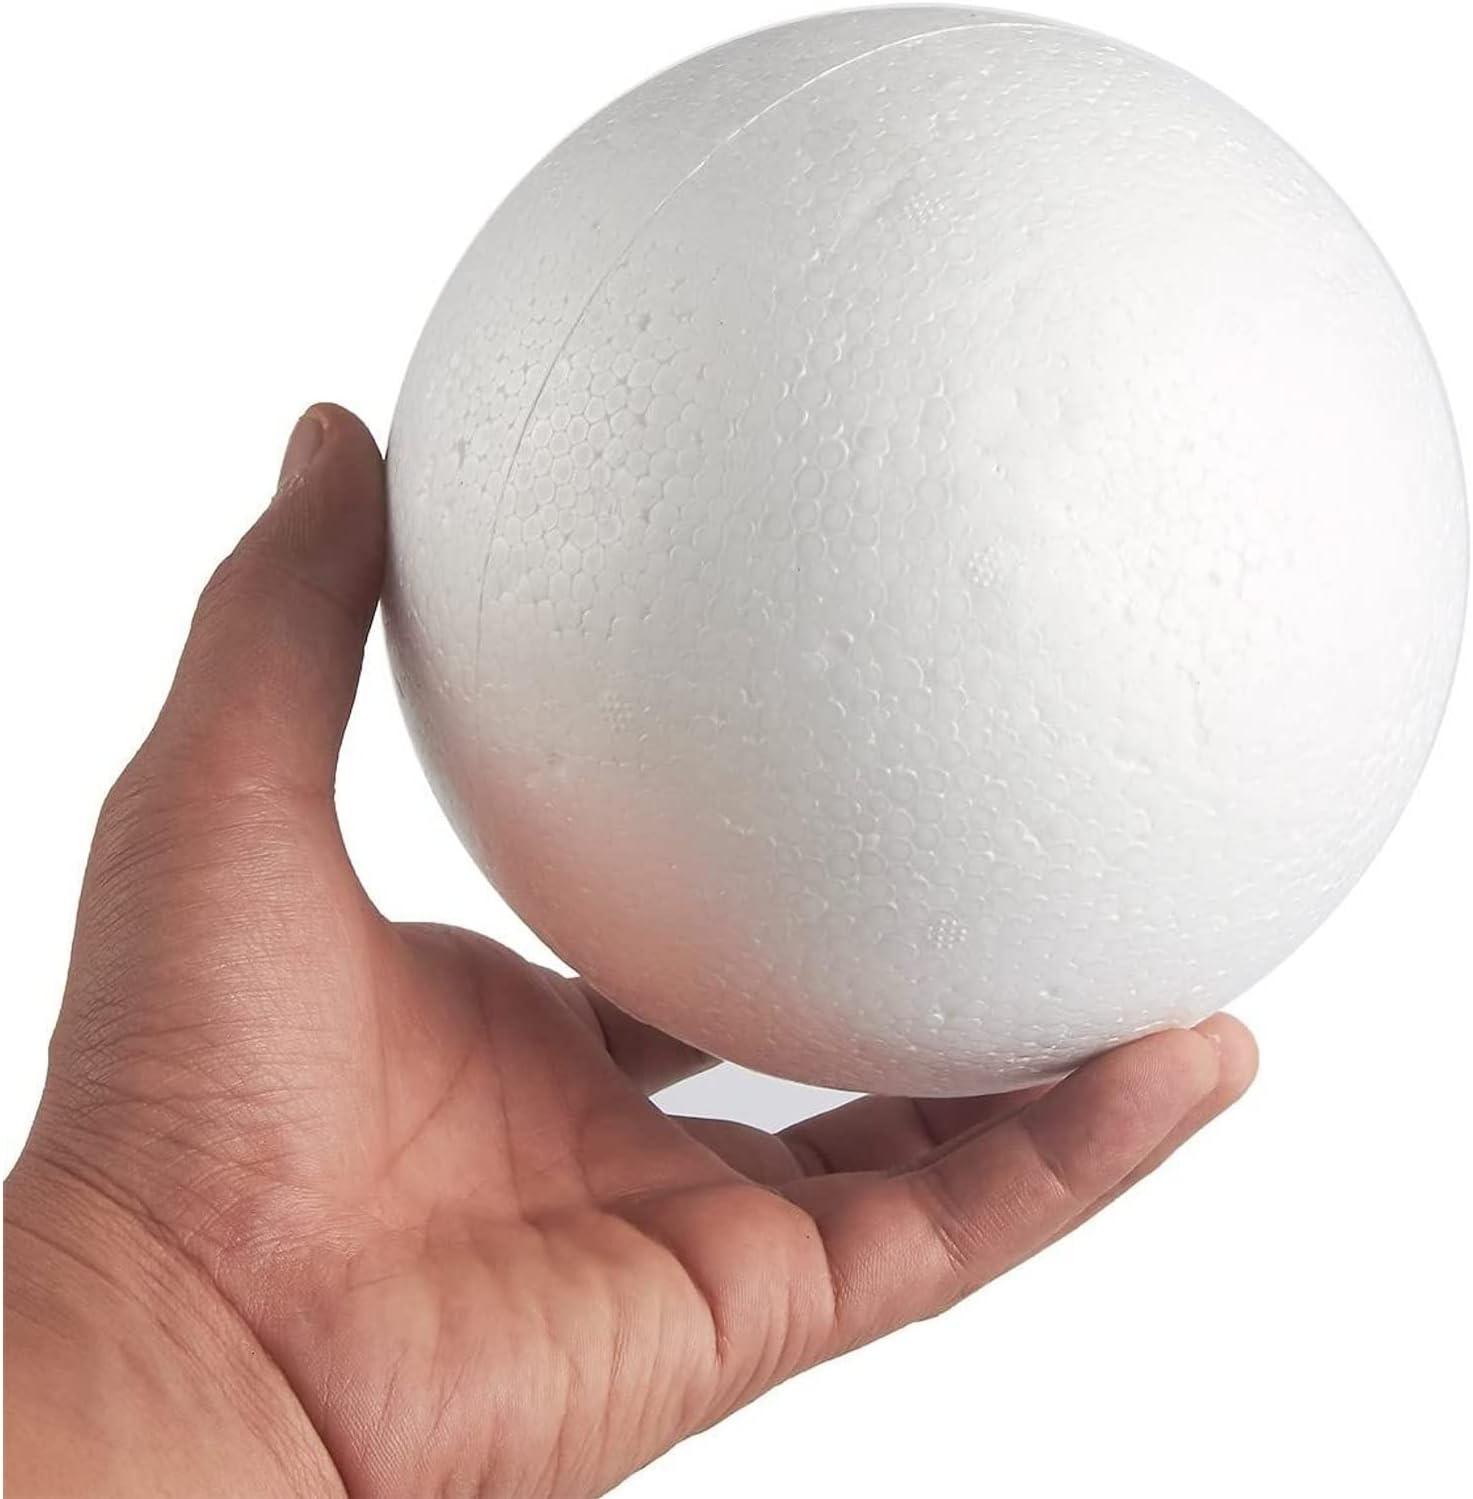 The Teachers' Lounge®  Craft Foam Balls, 6 Inch, White, Pack of 6